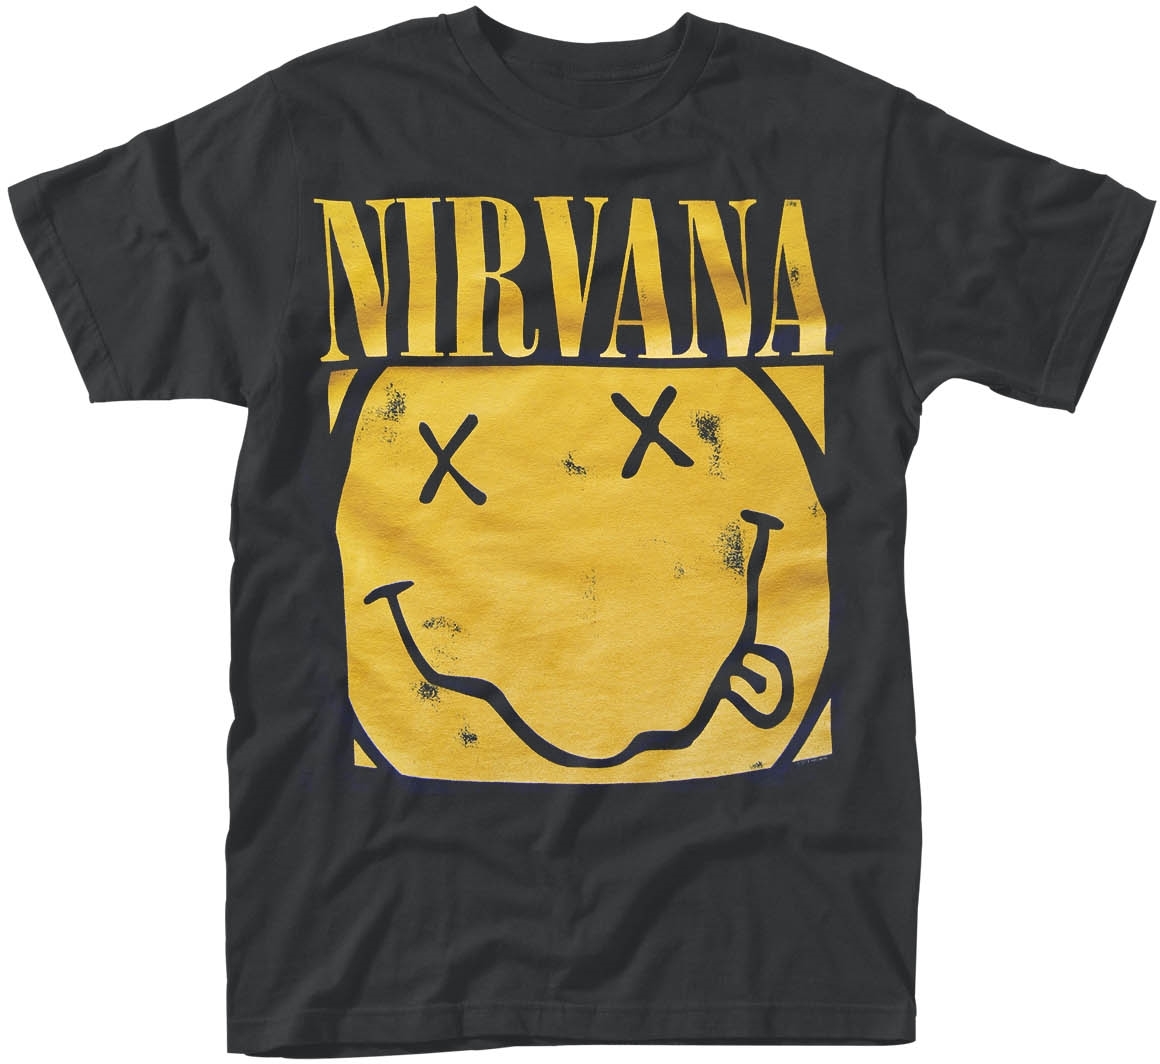 nirvana shirt price